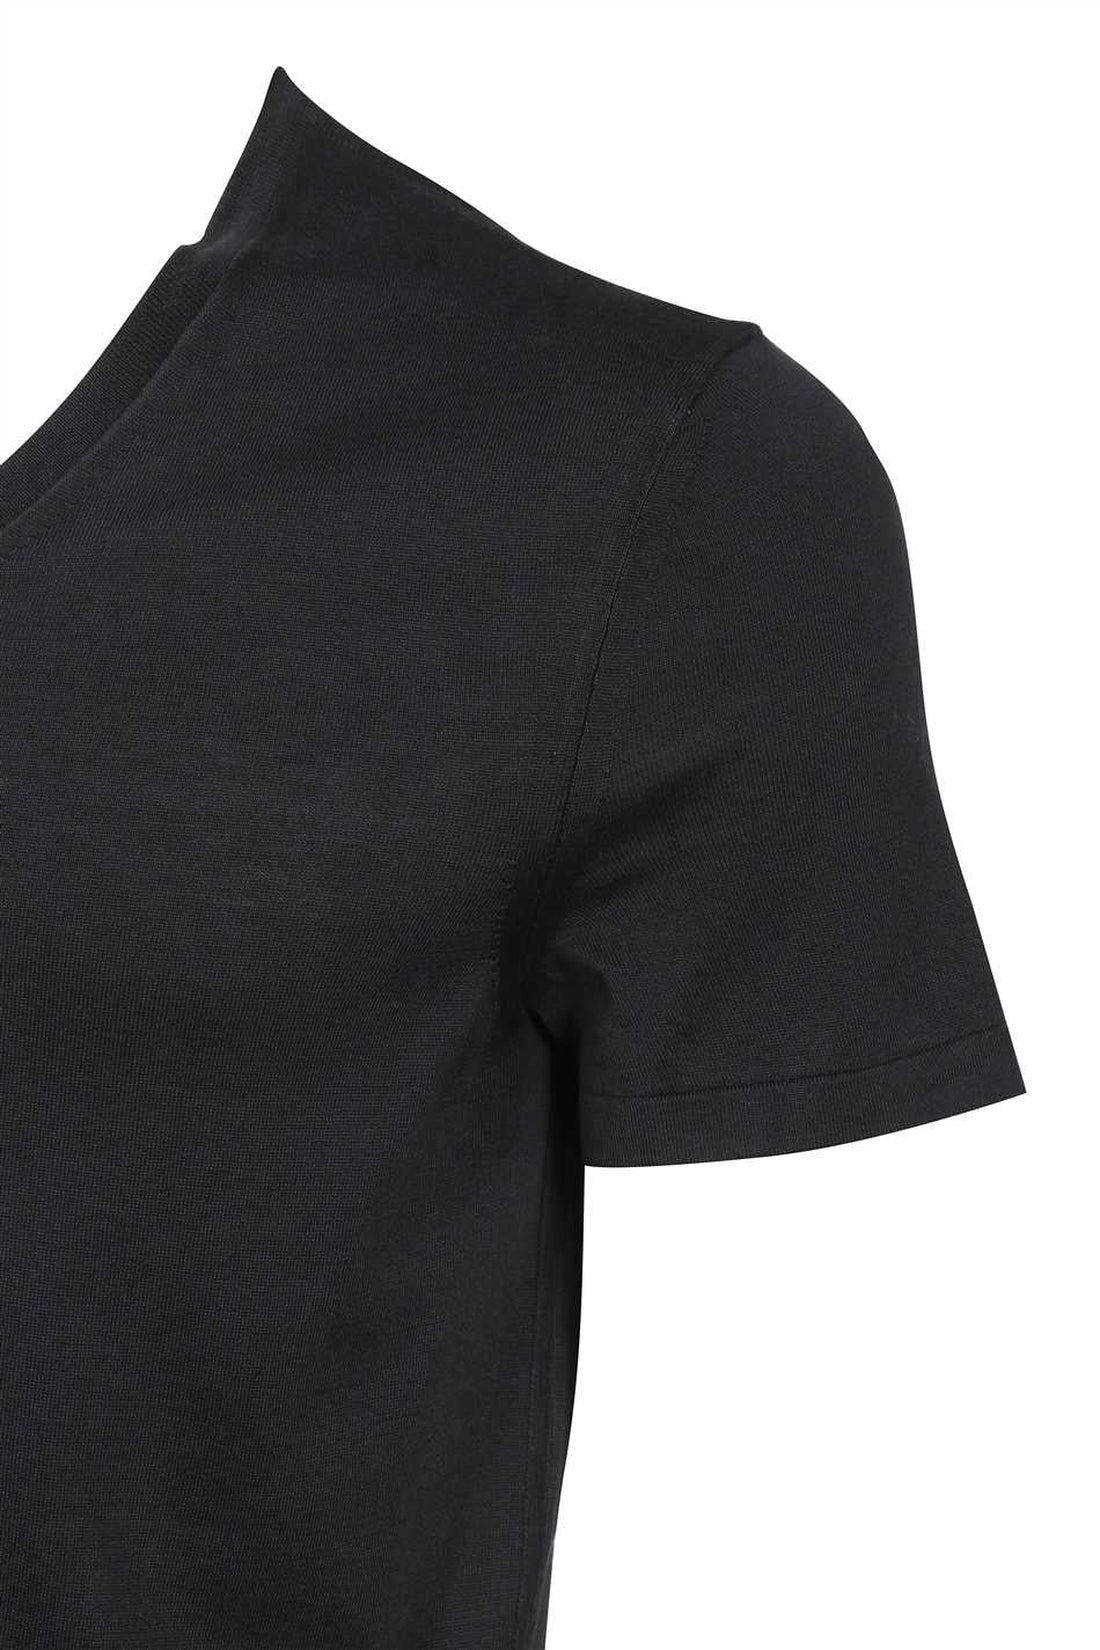 Tom Ford-OUTLET-SALE-Silk-cotton blend T-shirt-ARCHIVIST